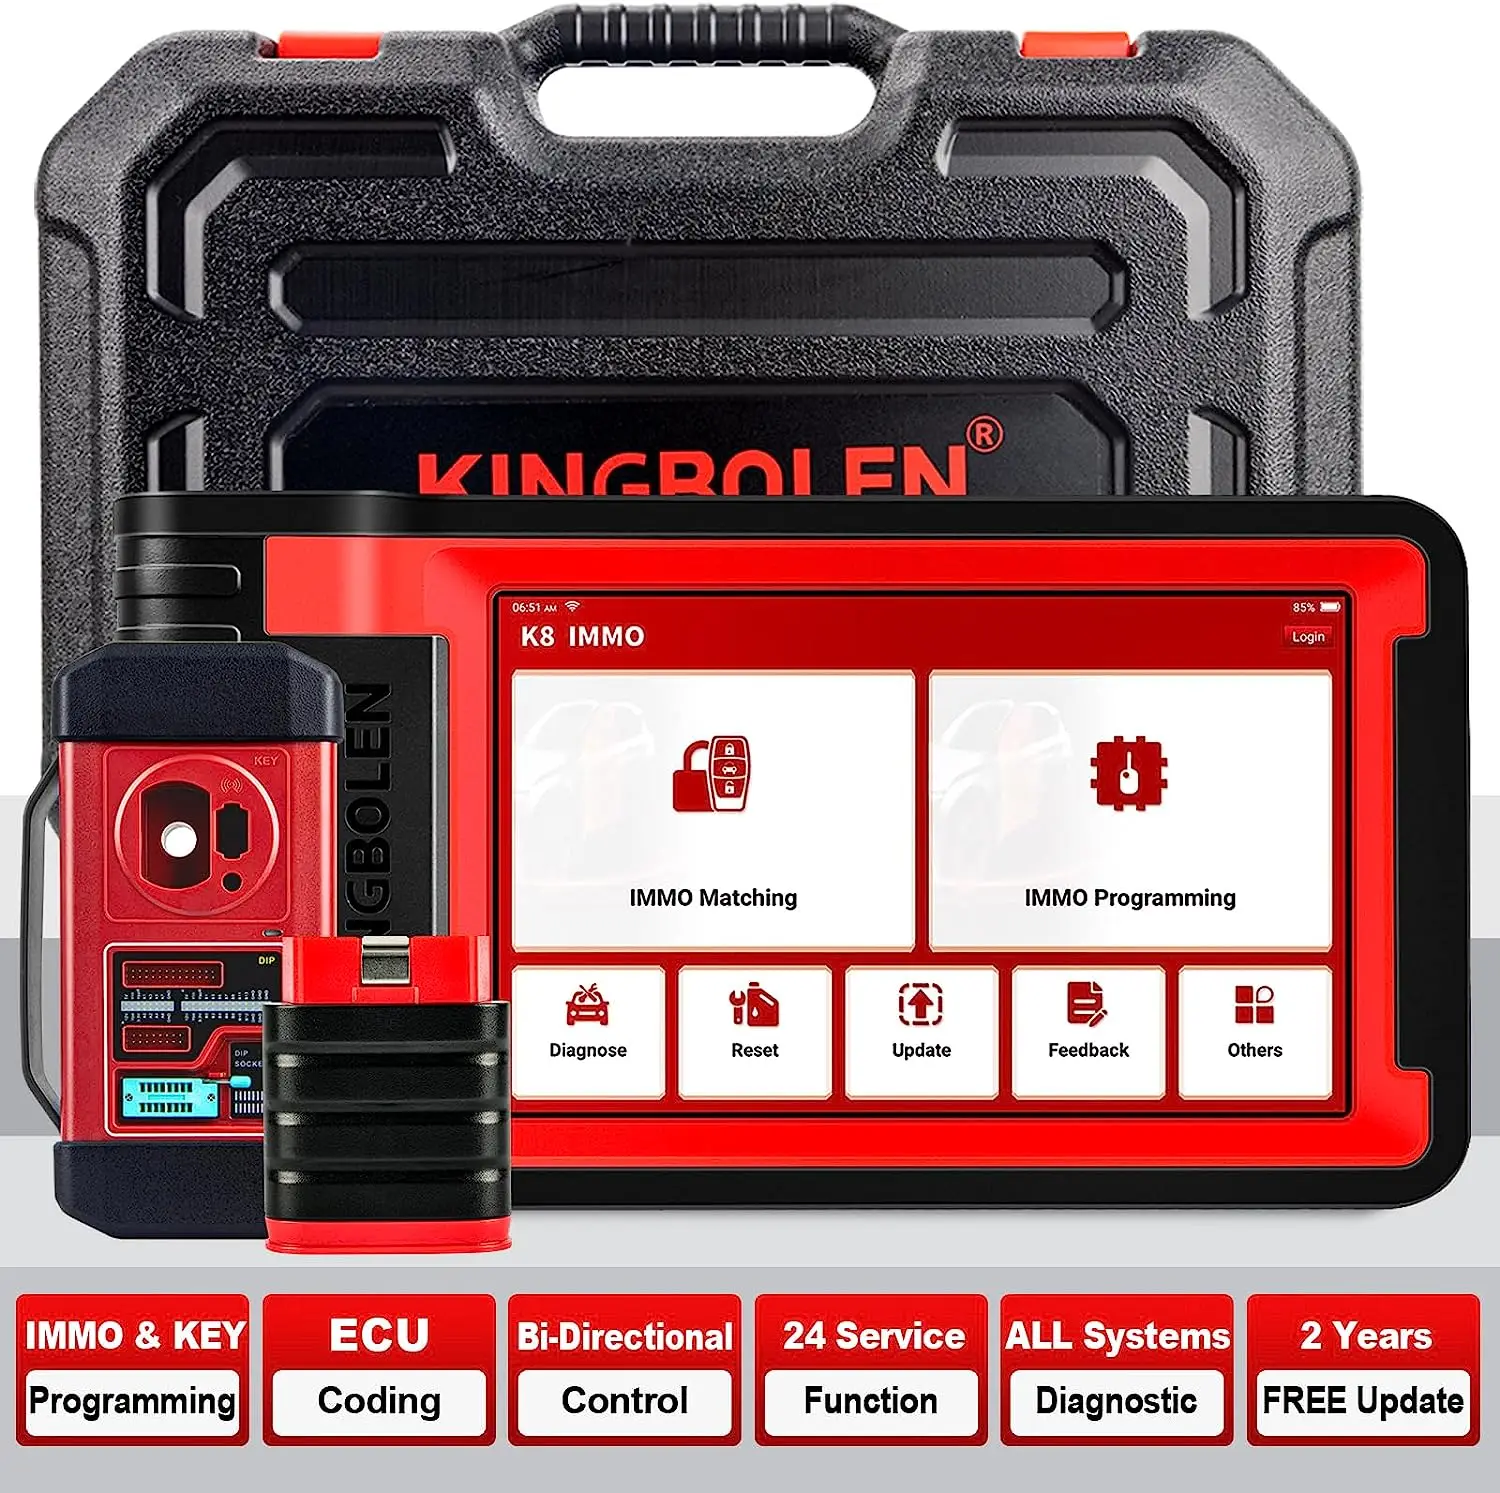 

Kingbolen K8 IMMO Key Matching Programming OBD2 Scan Tool, All Systems ECU Coding Bi-Directional Test Car Diagnositic Scanner